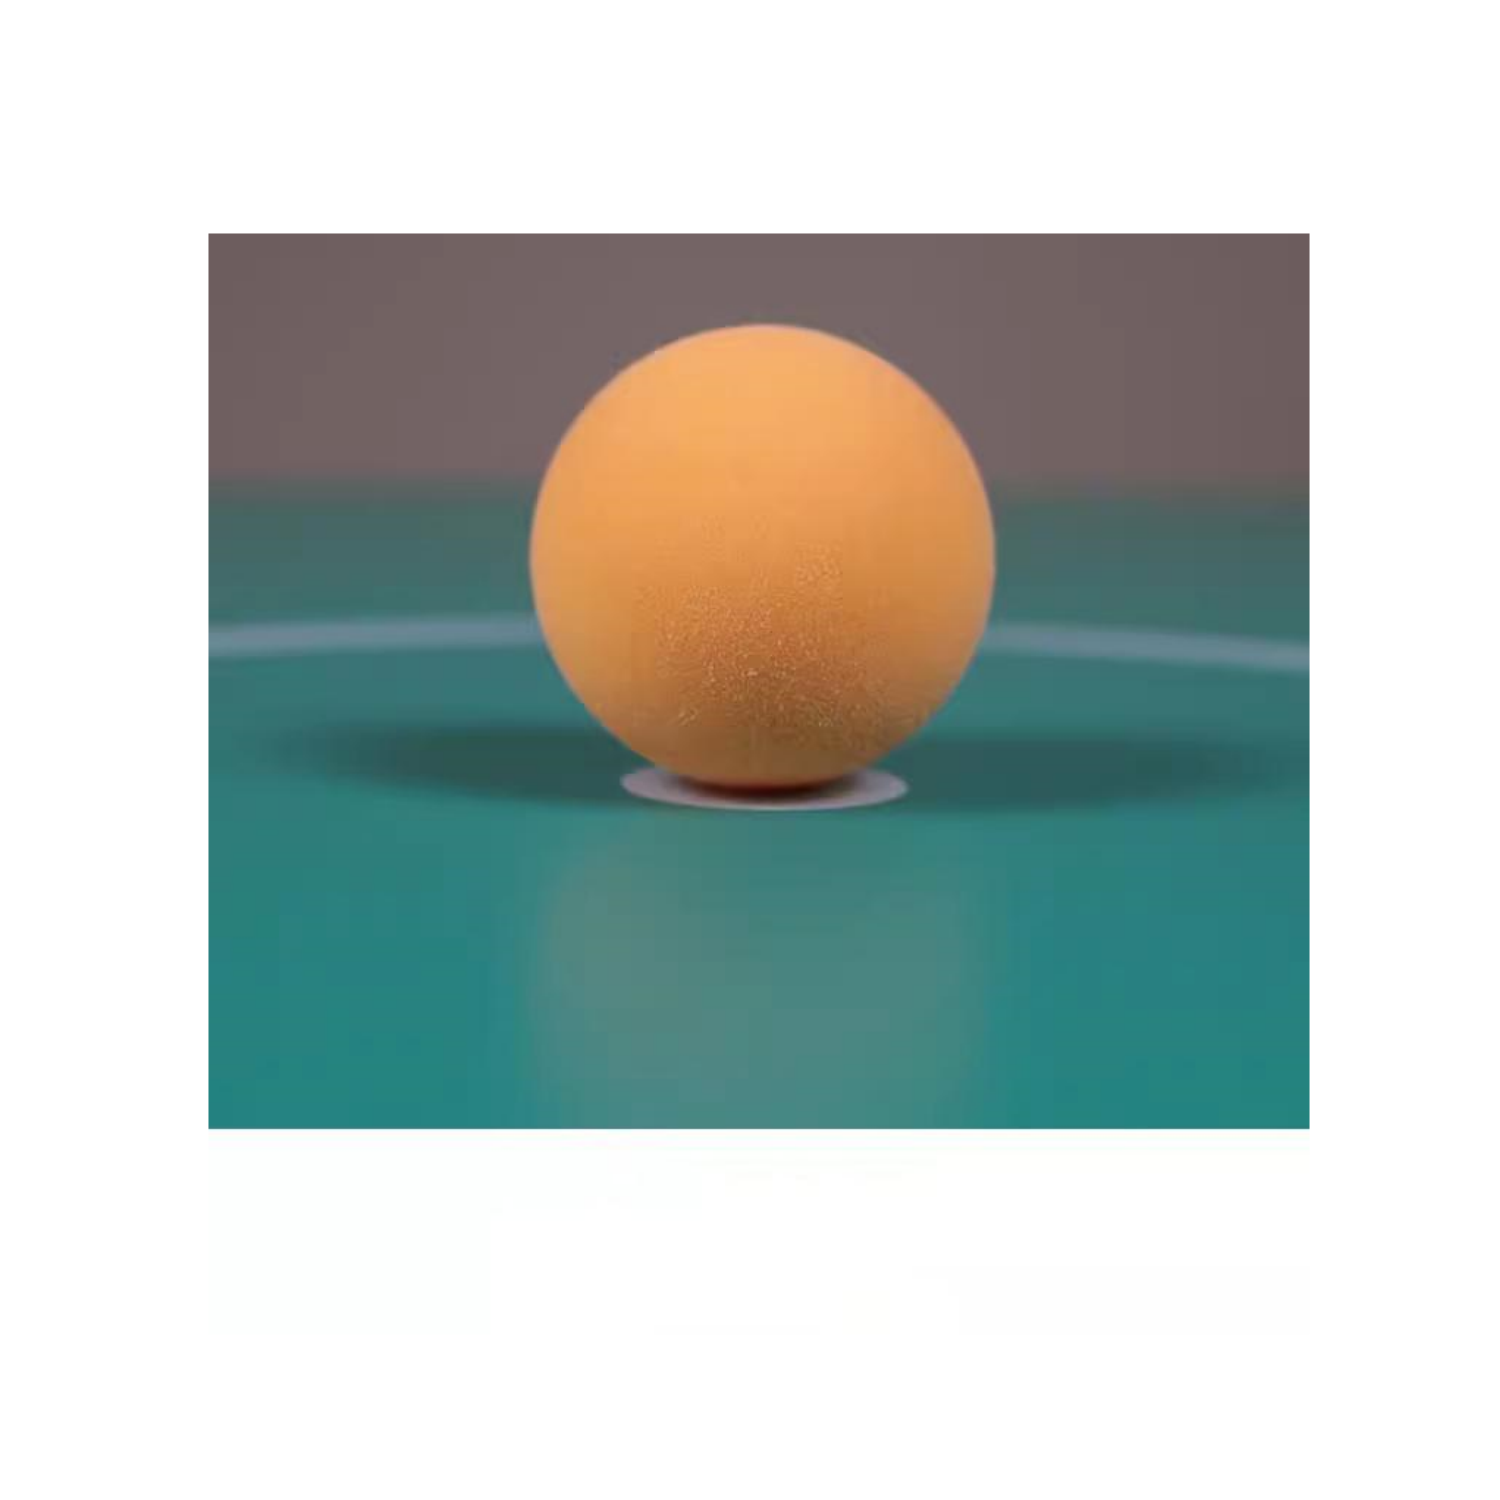 36mm Competition Fossball Balls-2PCS/Set